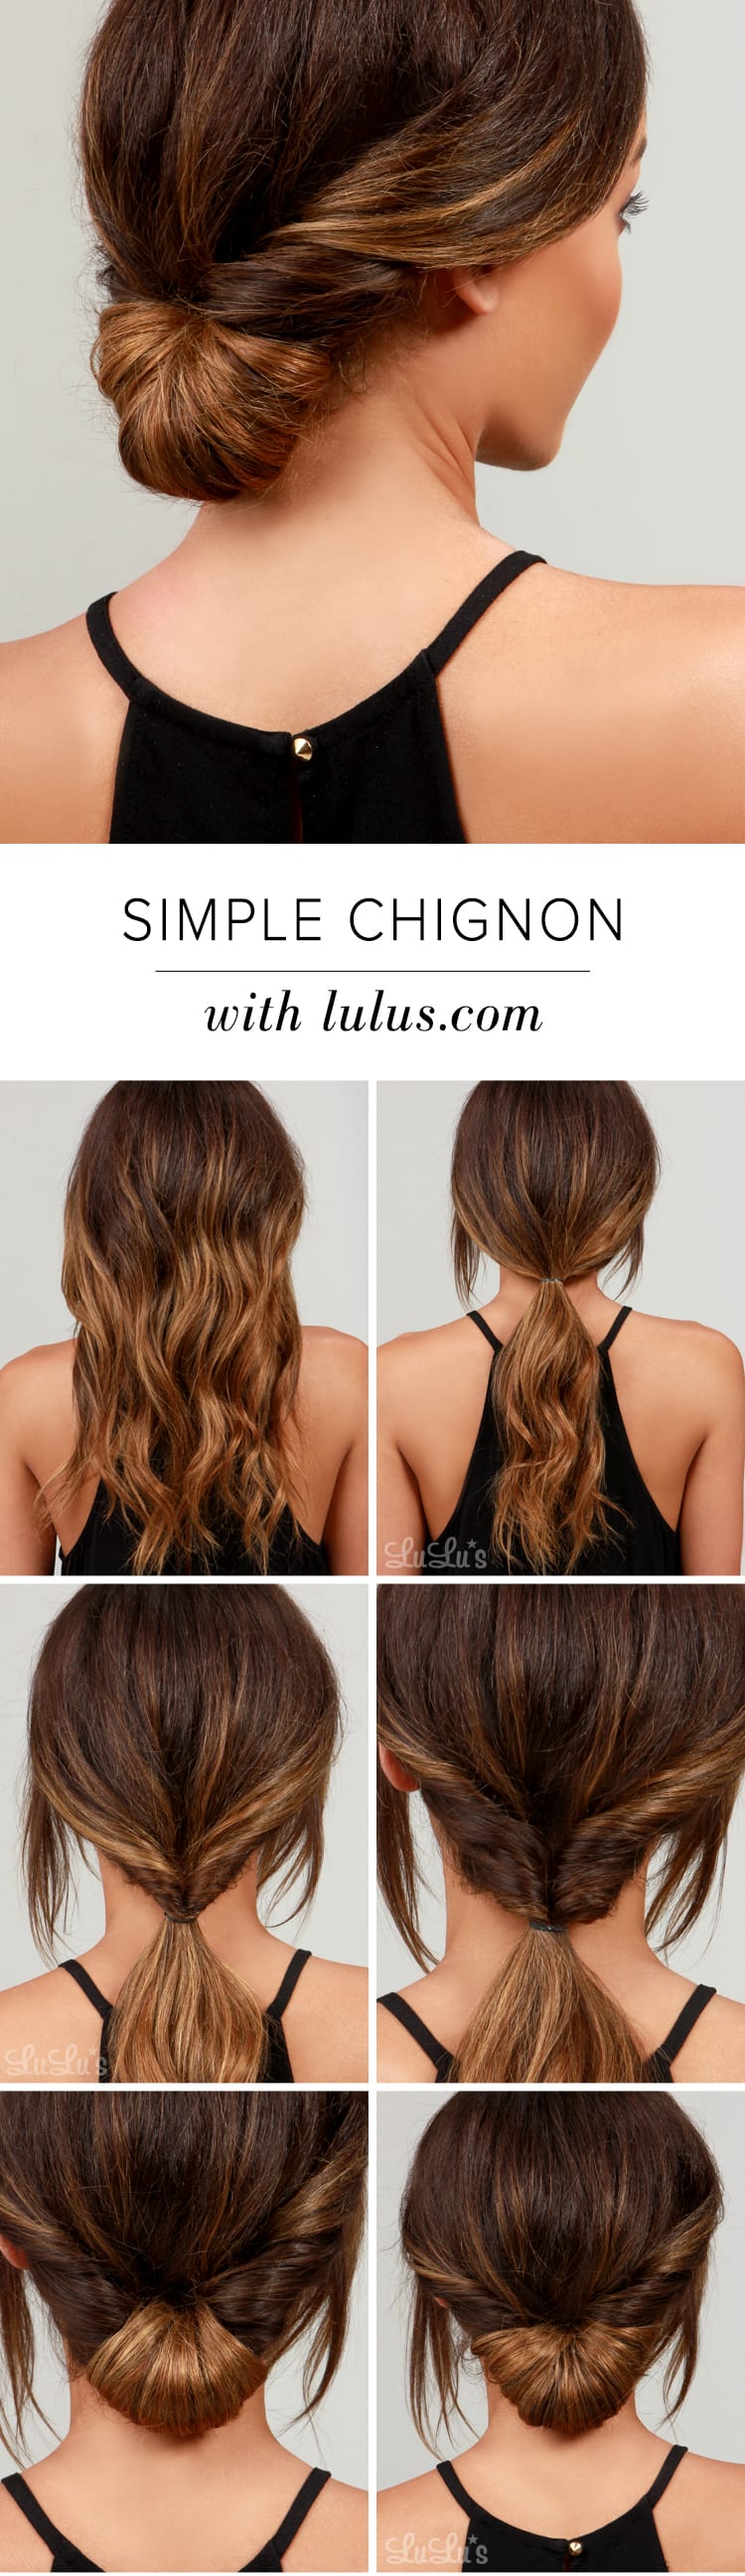 Lulus How To Simple Chignon Hair Tutorial Lulus Com Fashion Blog